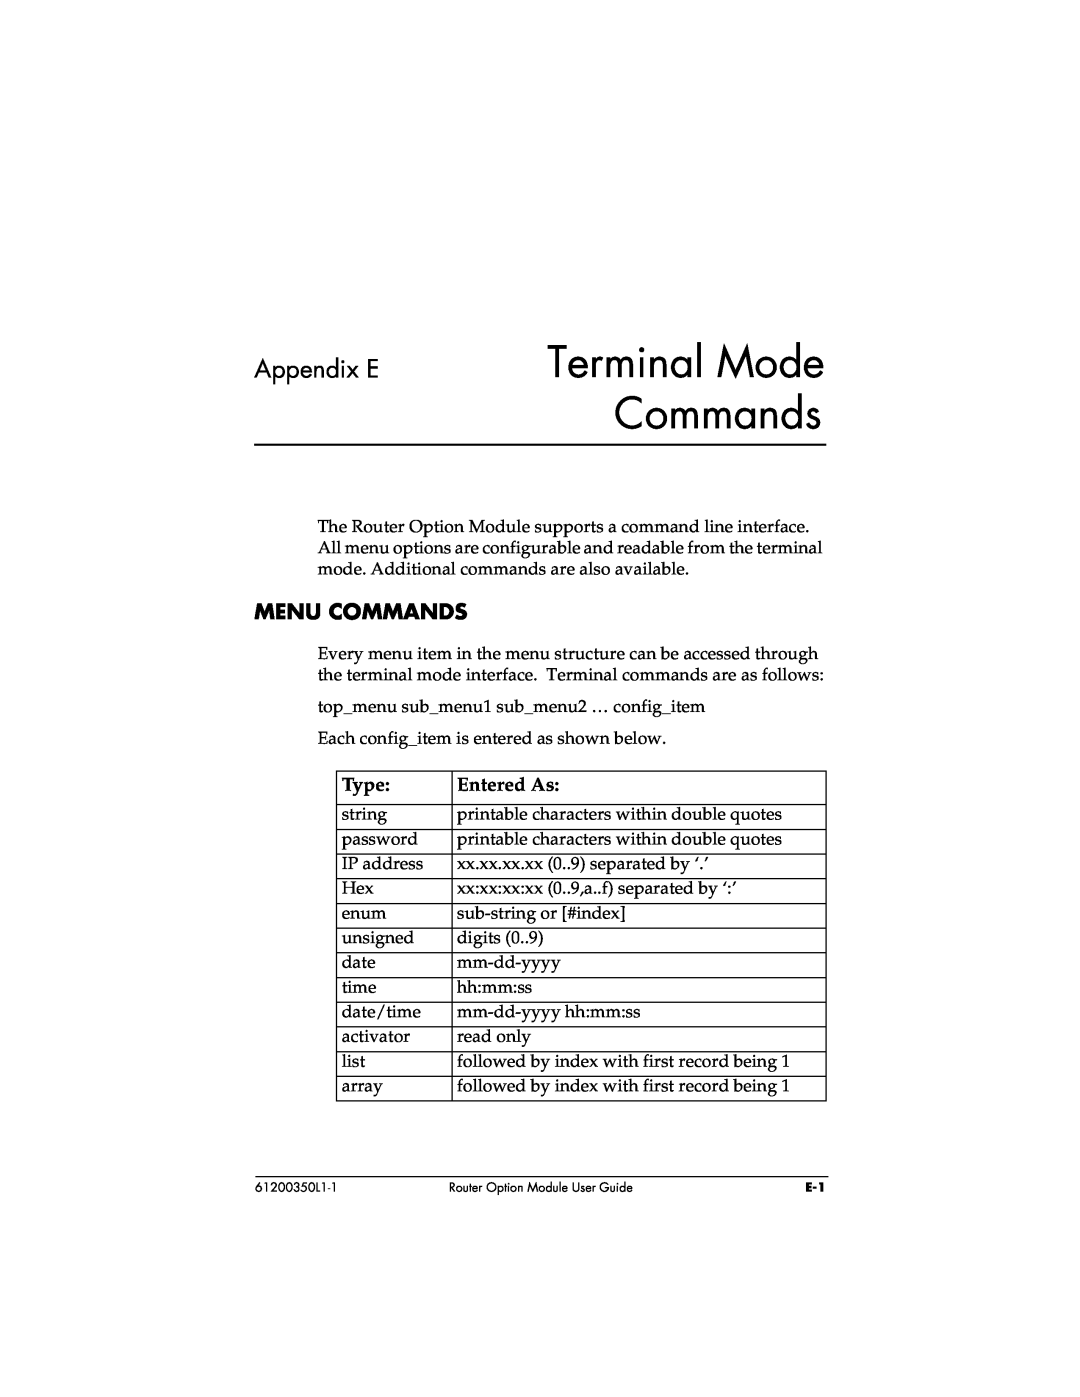 ADTRAN 1200350L1 user manual Terminal Mode Commands, Appendix E, Menu Commands, Type, Entered As 